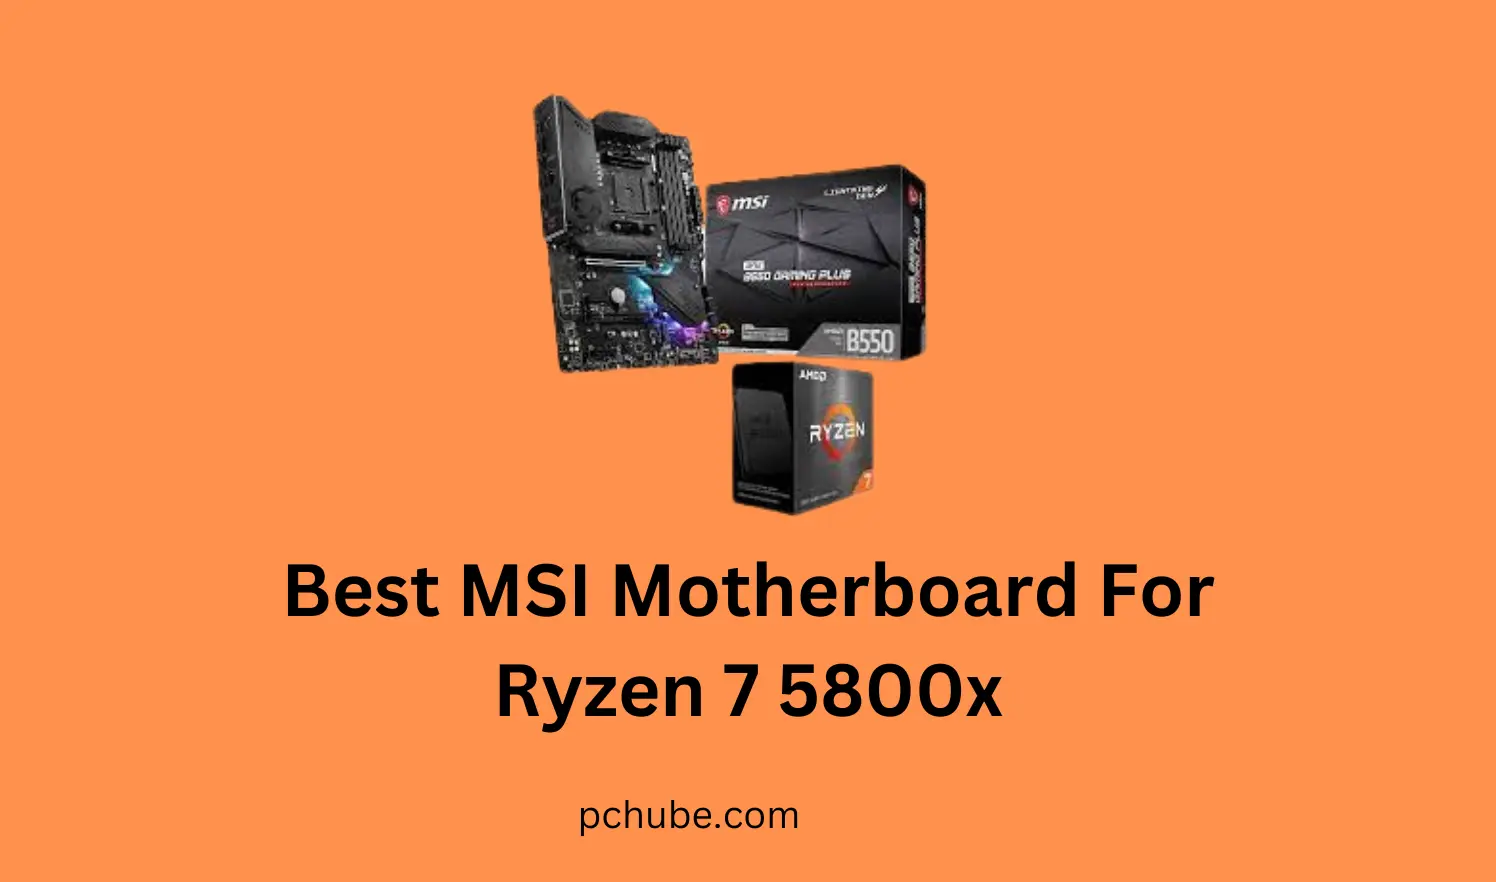 Best MSI Motherboard For Ryzen 7 5800x